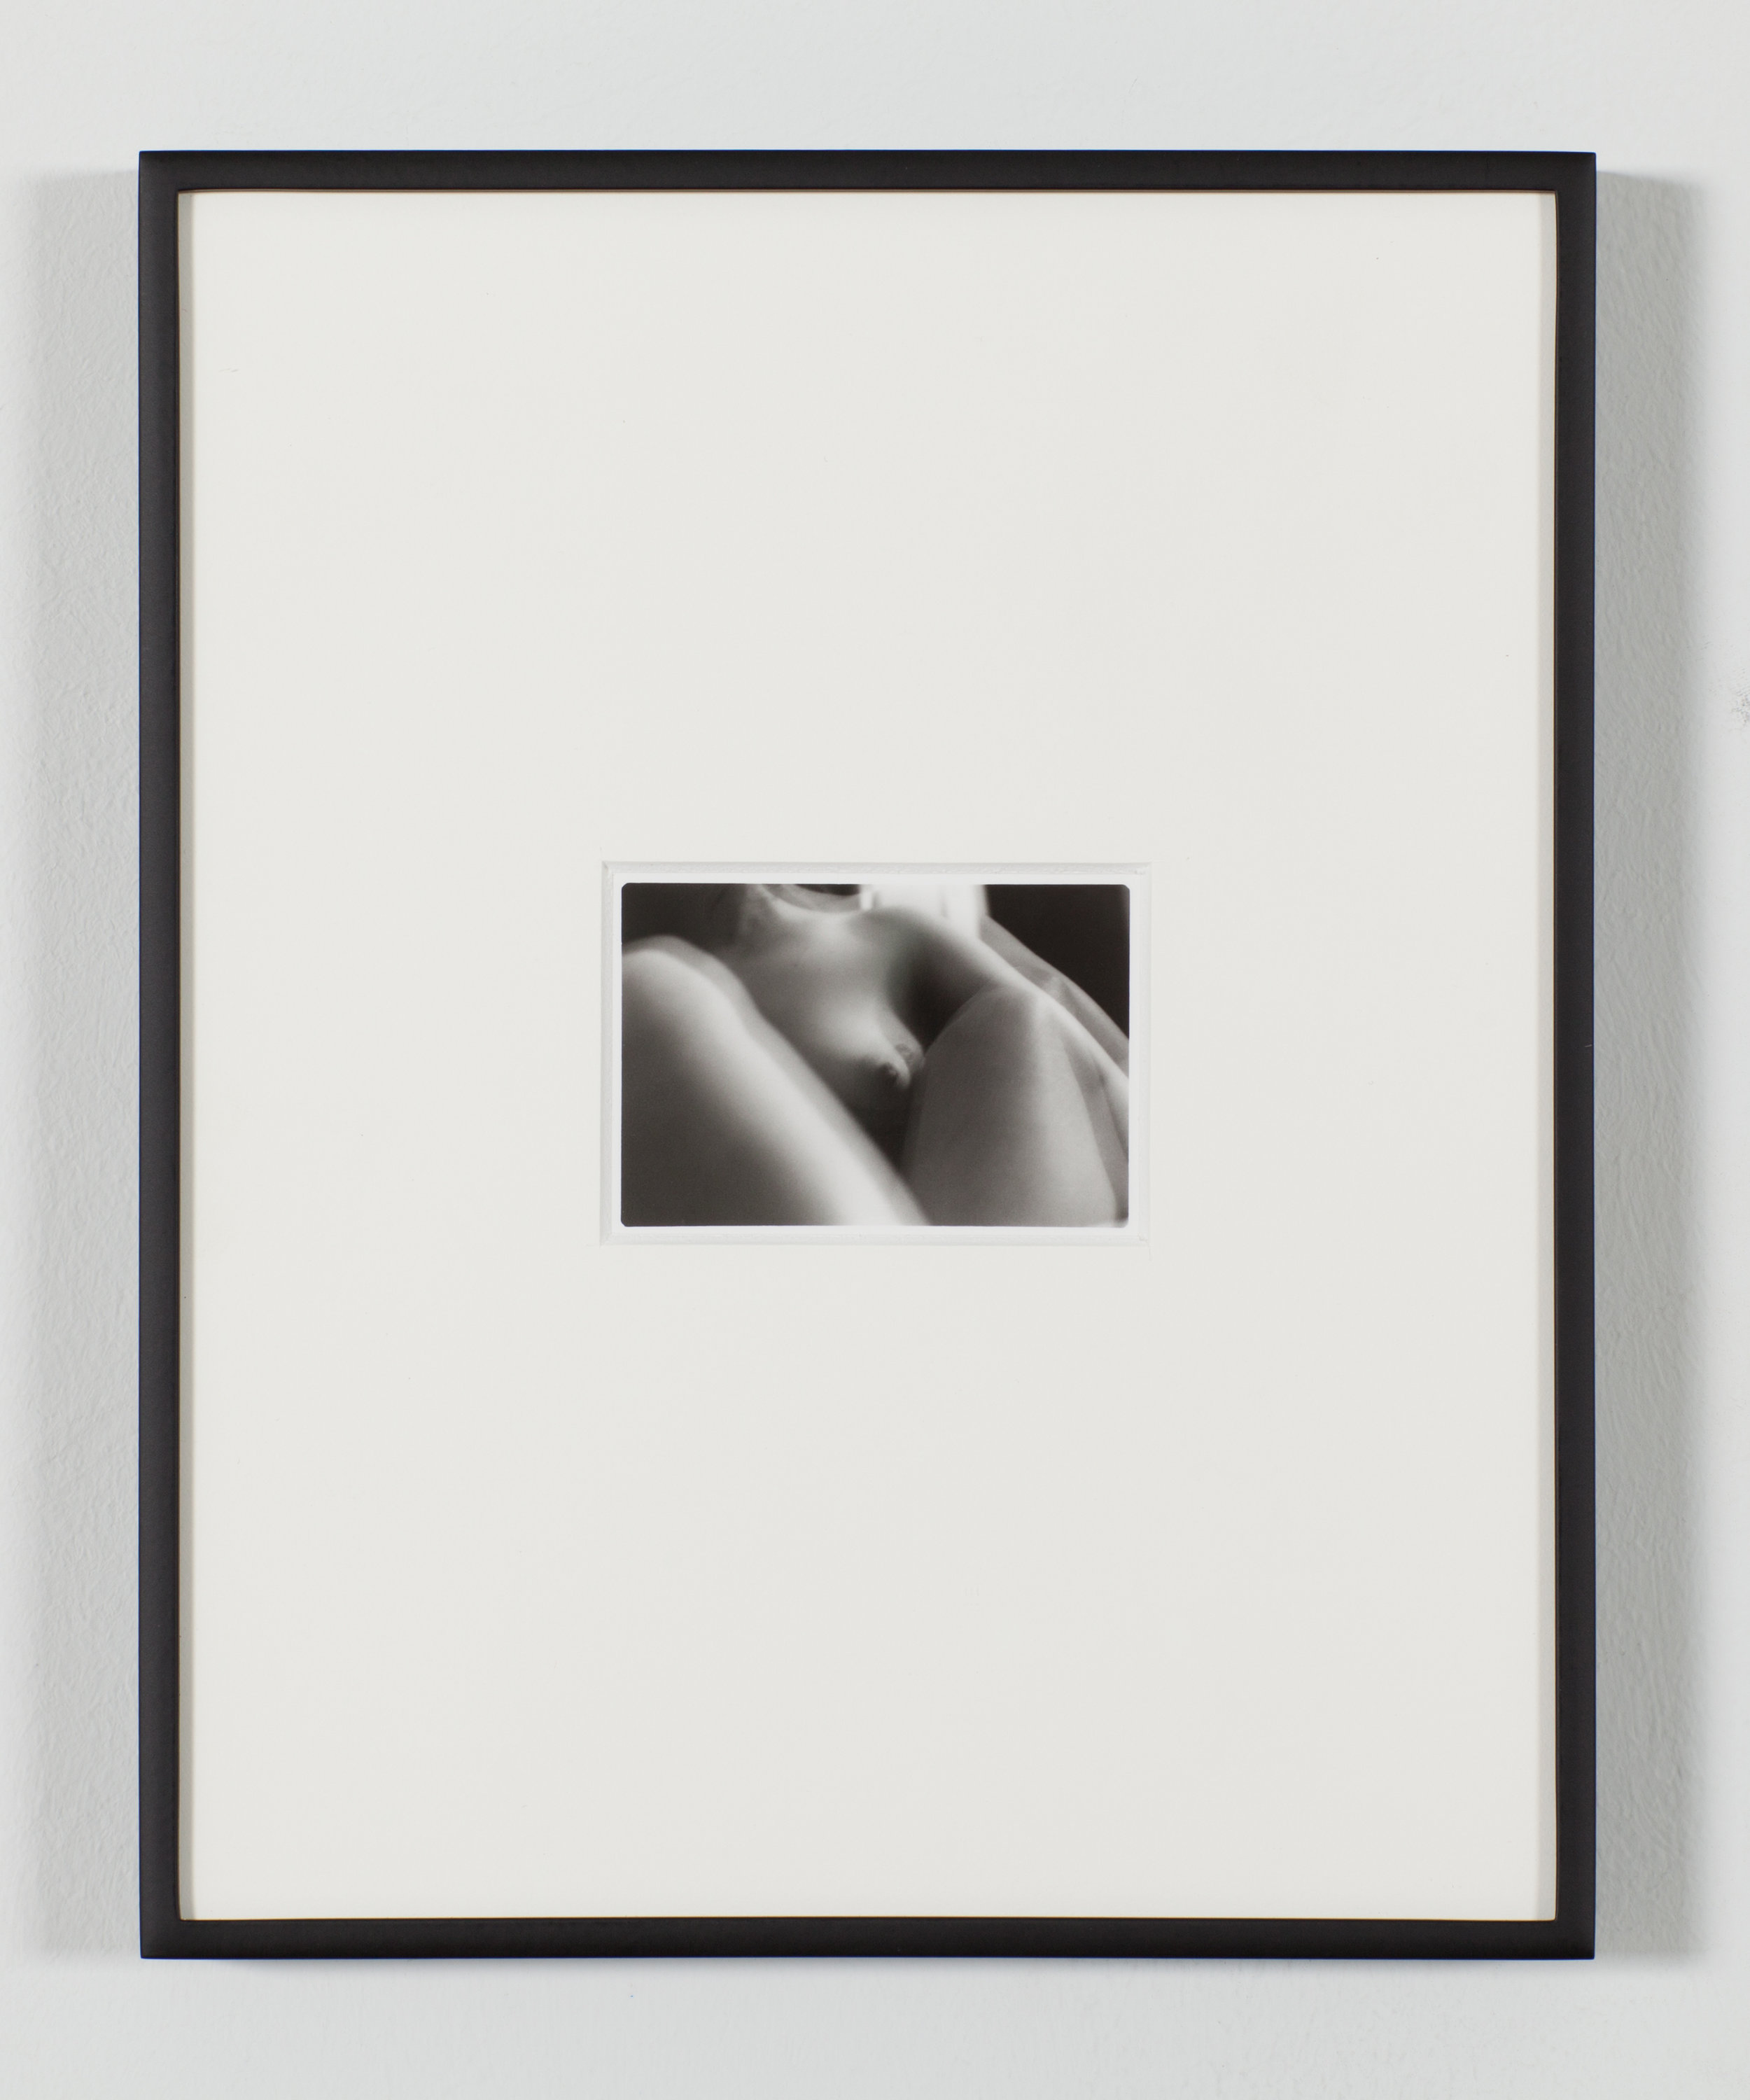  Untitled, 2019 Gelatin Silver Print 2.7x1.8" in 8x10" Aluminum Frame 